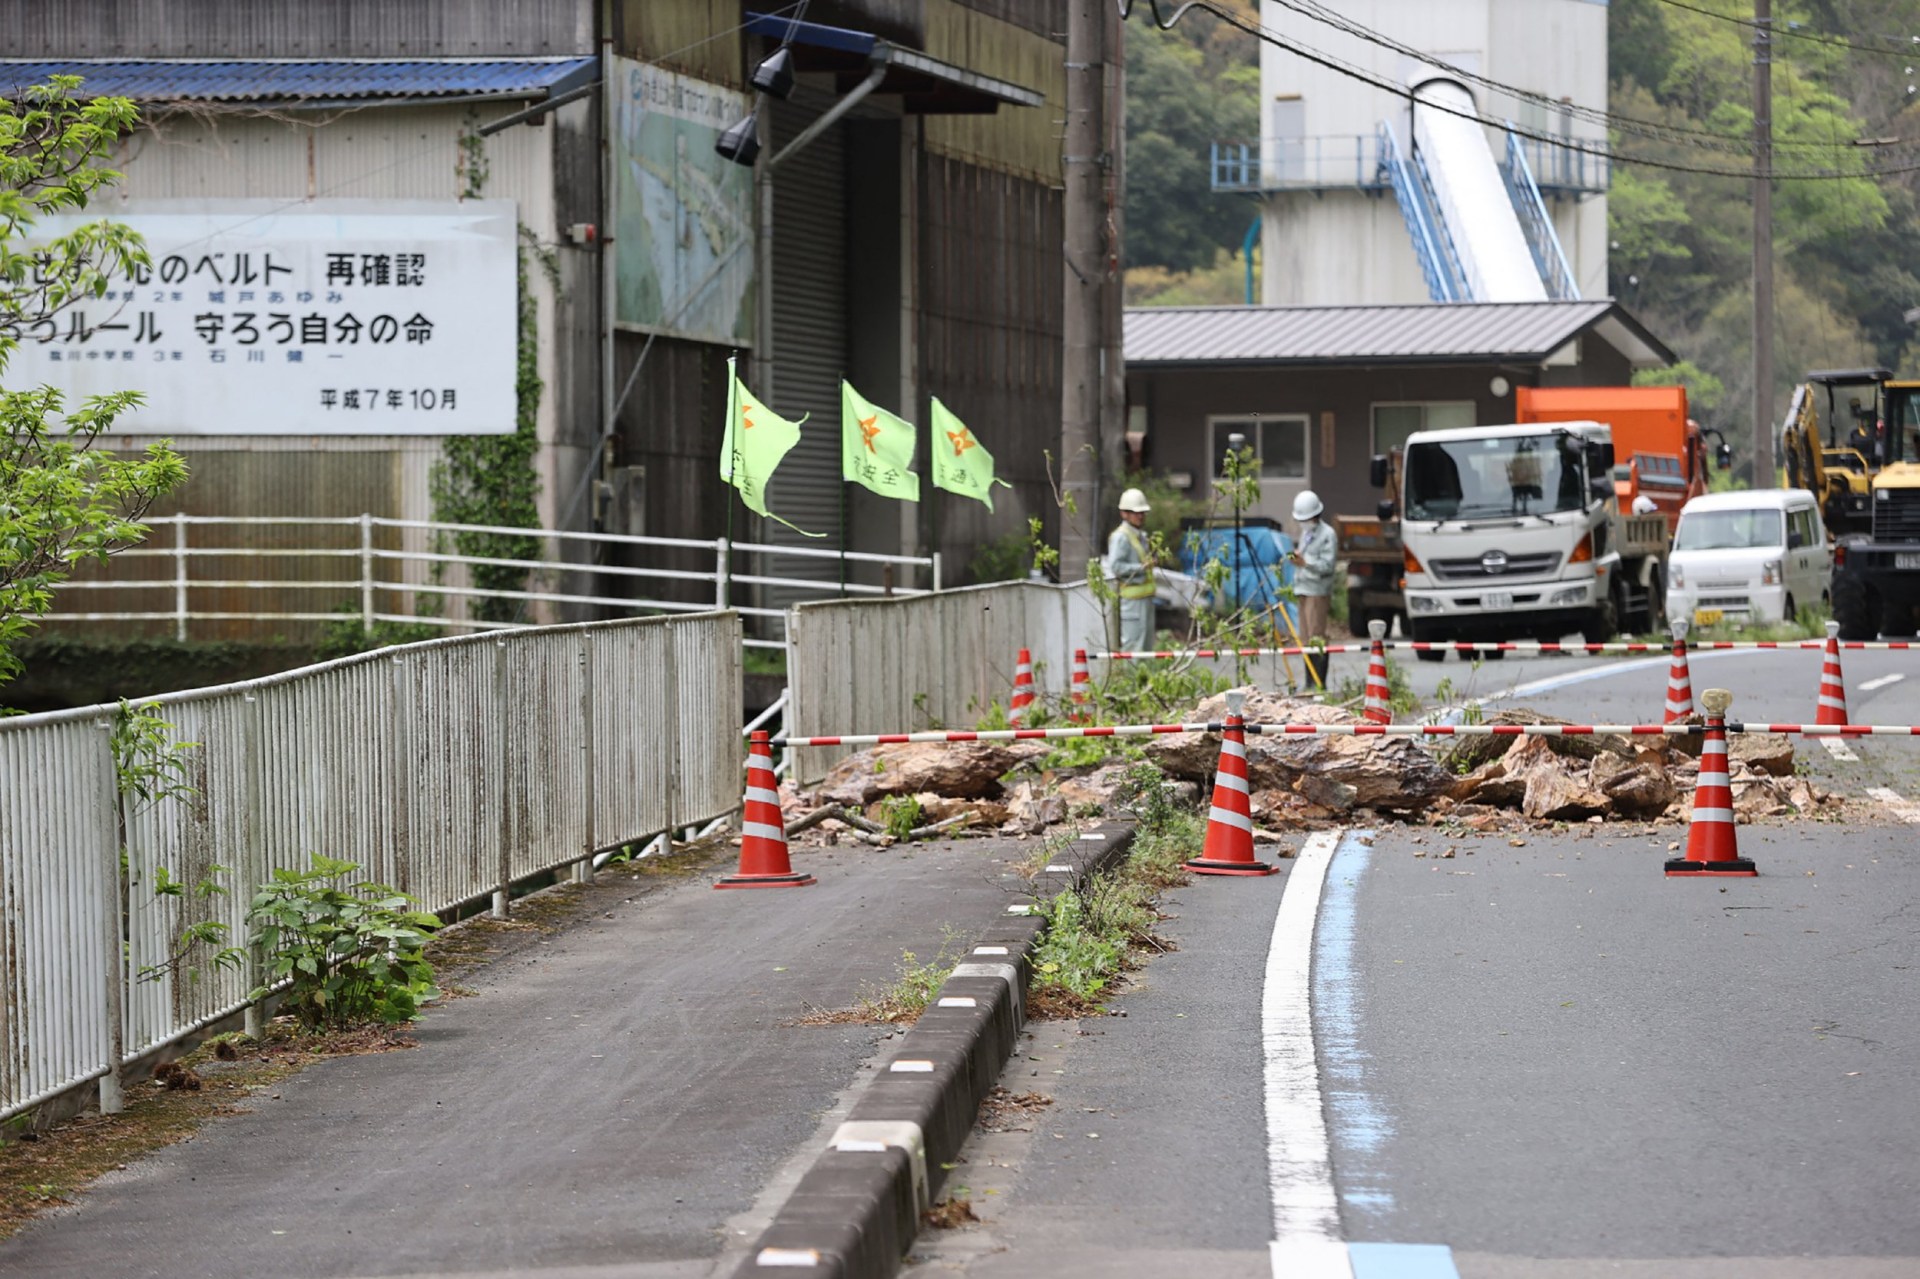 millions on alert after 6.4-magnitude earthquake jolts japan